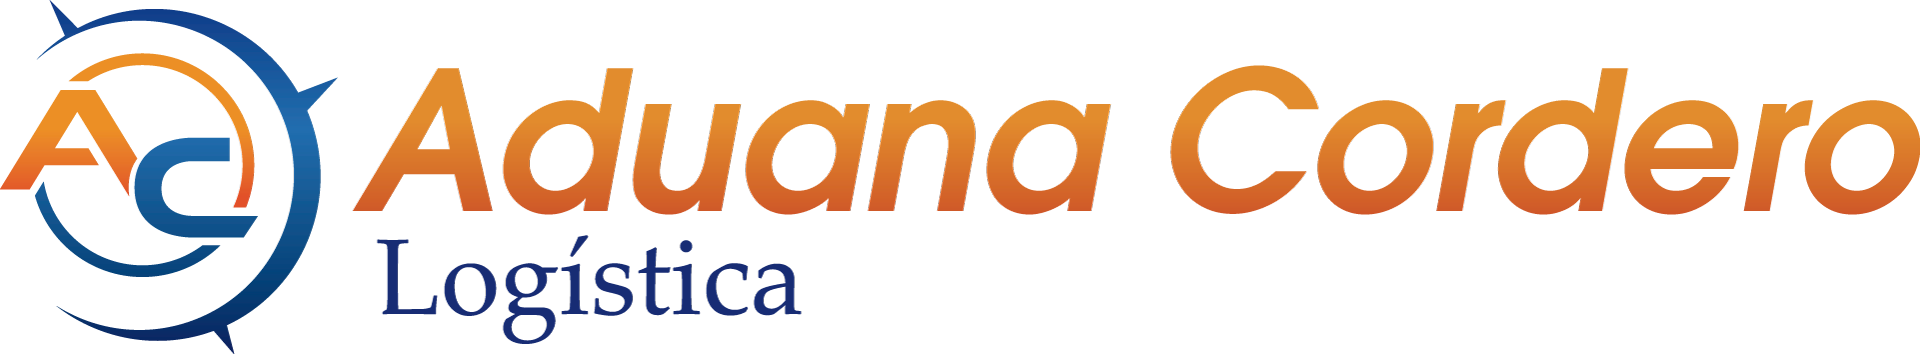 Logo Aduana Cordero